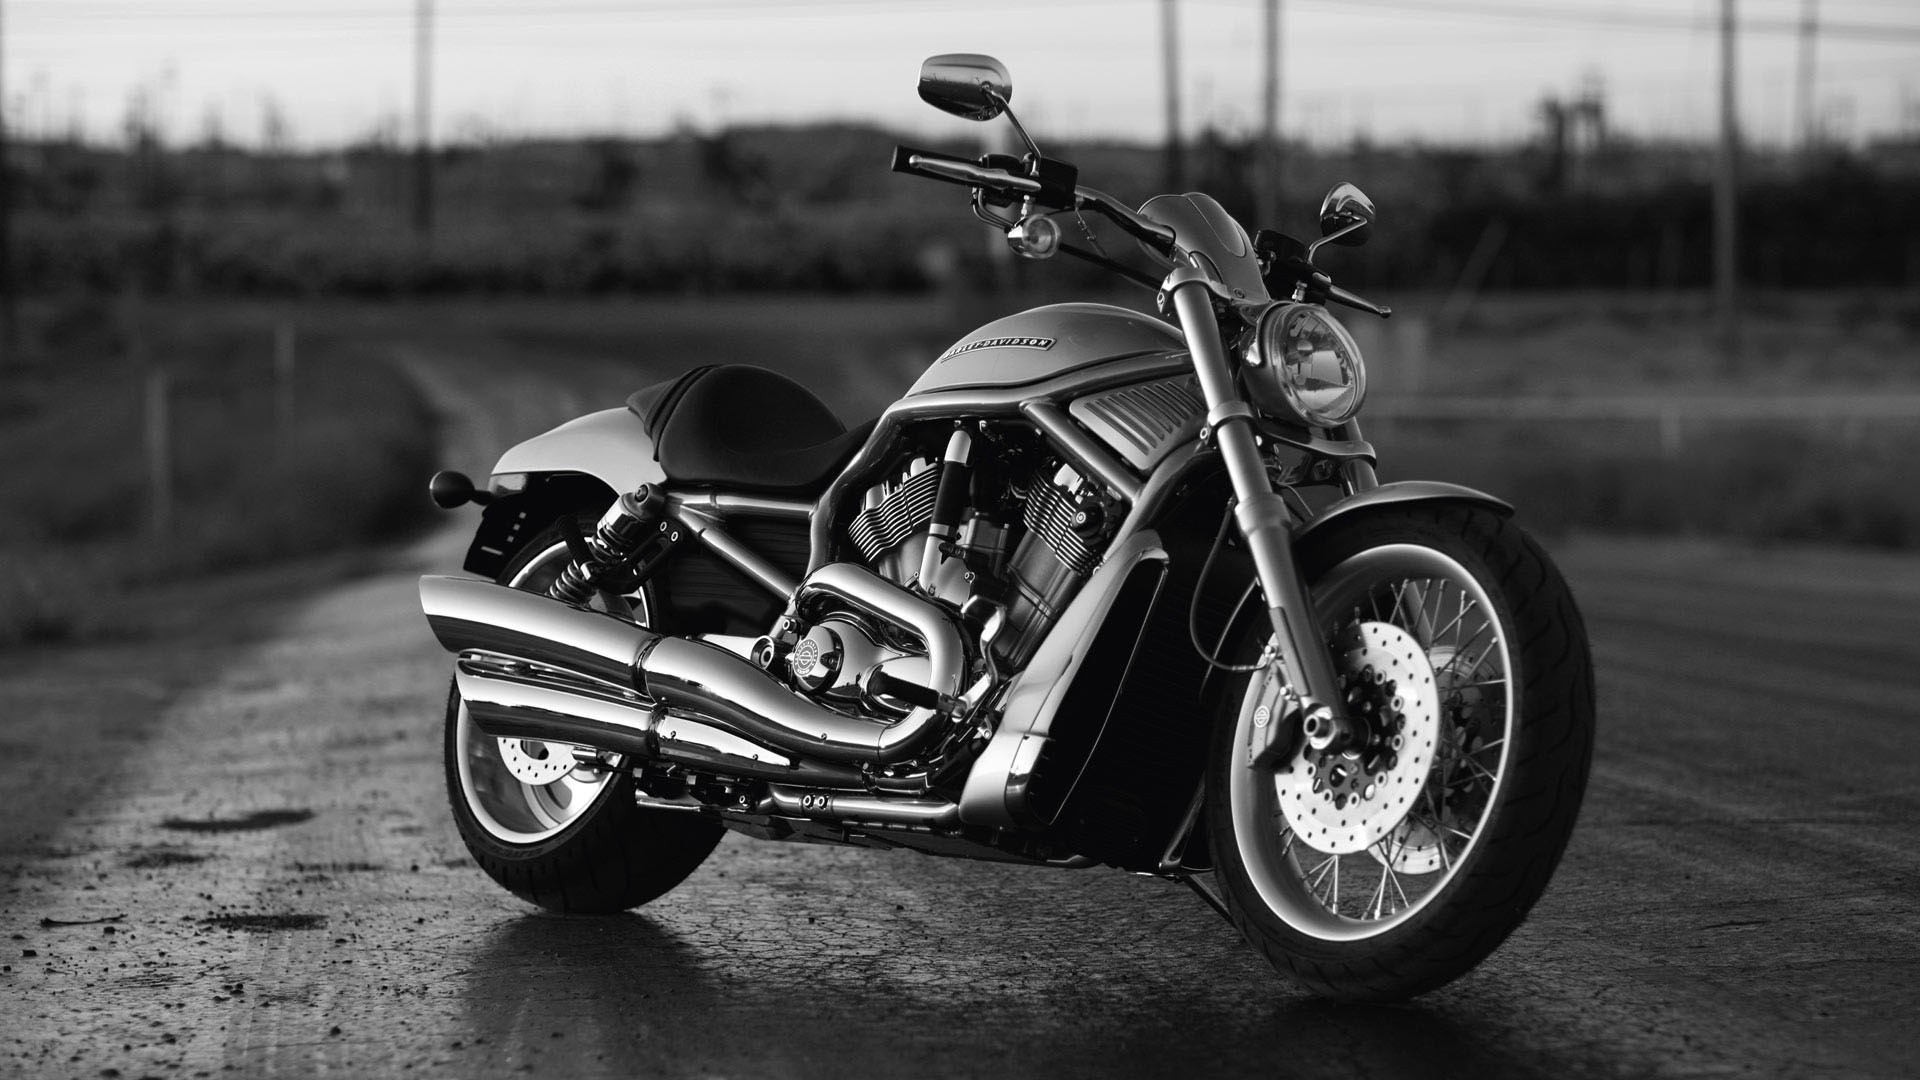 Best Motorcycle Harley Davidson Wallpaper High